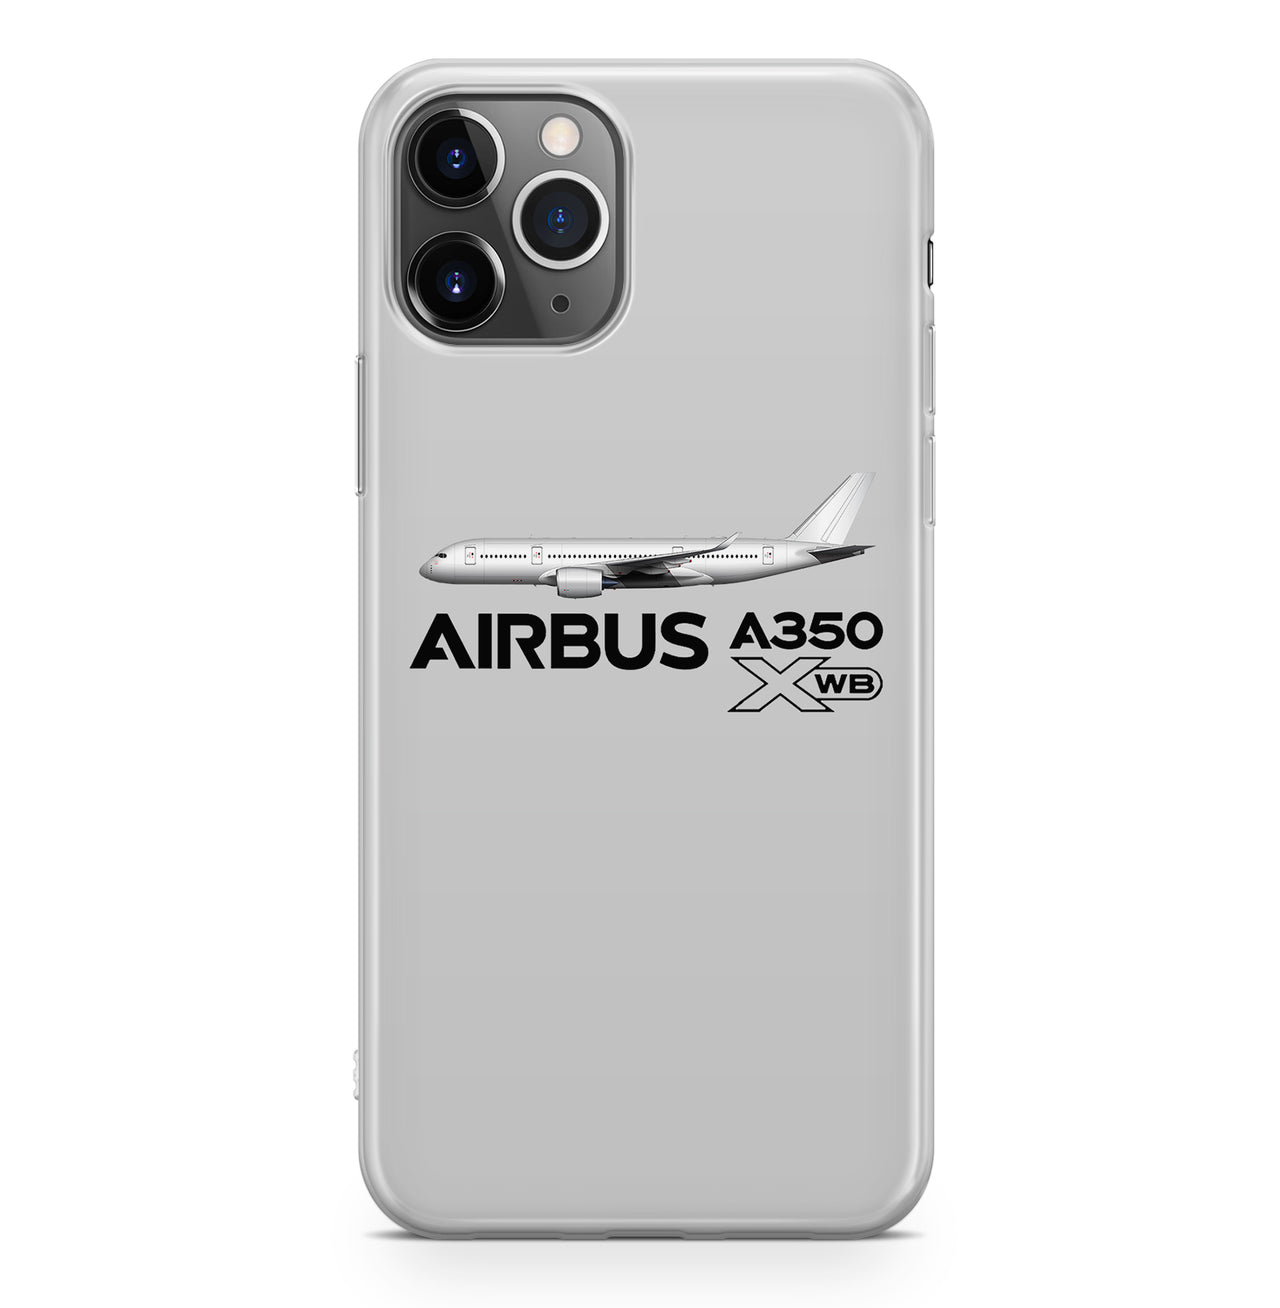 The Airbus A350 WXB Designed iPhone Cases